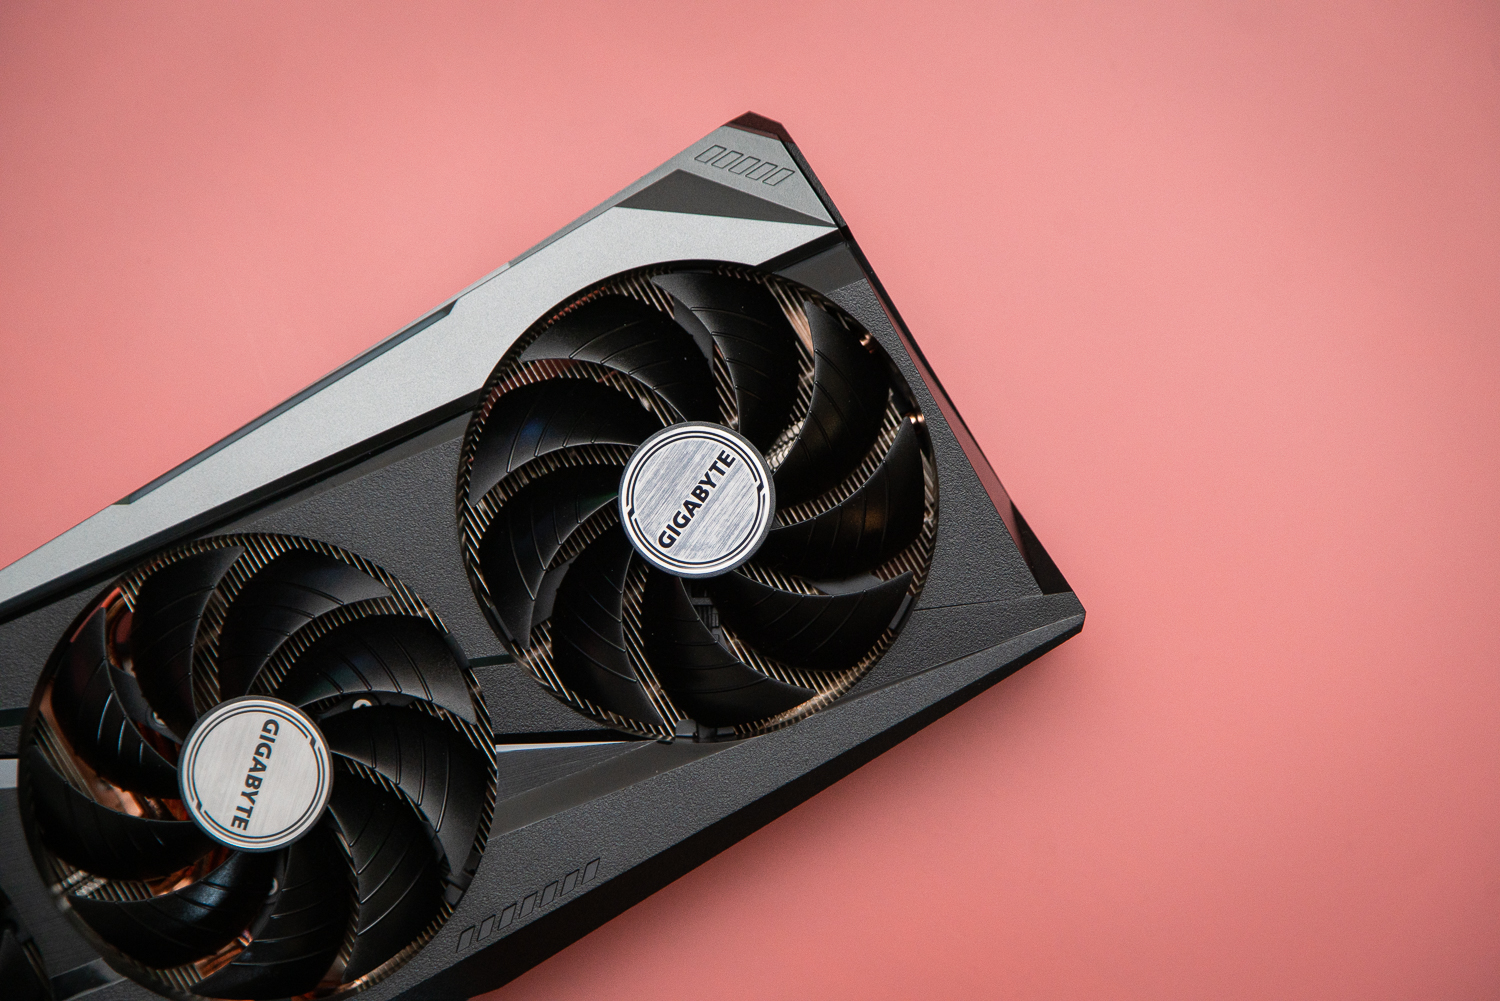 AMD Radeon RX 7600 graphics card could show up at Computex